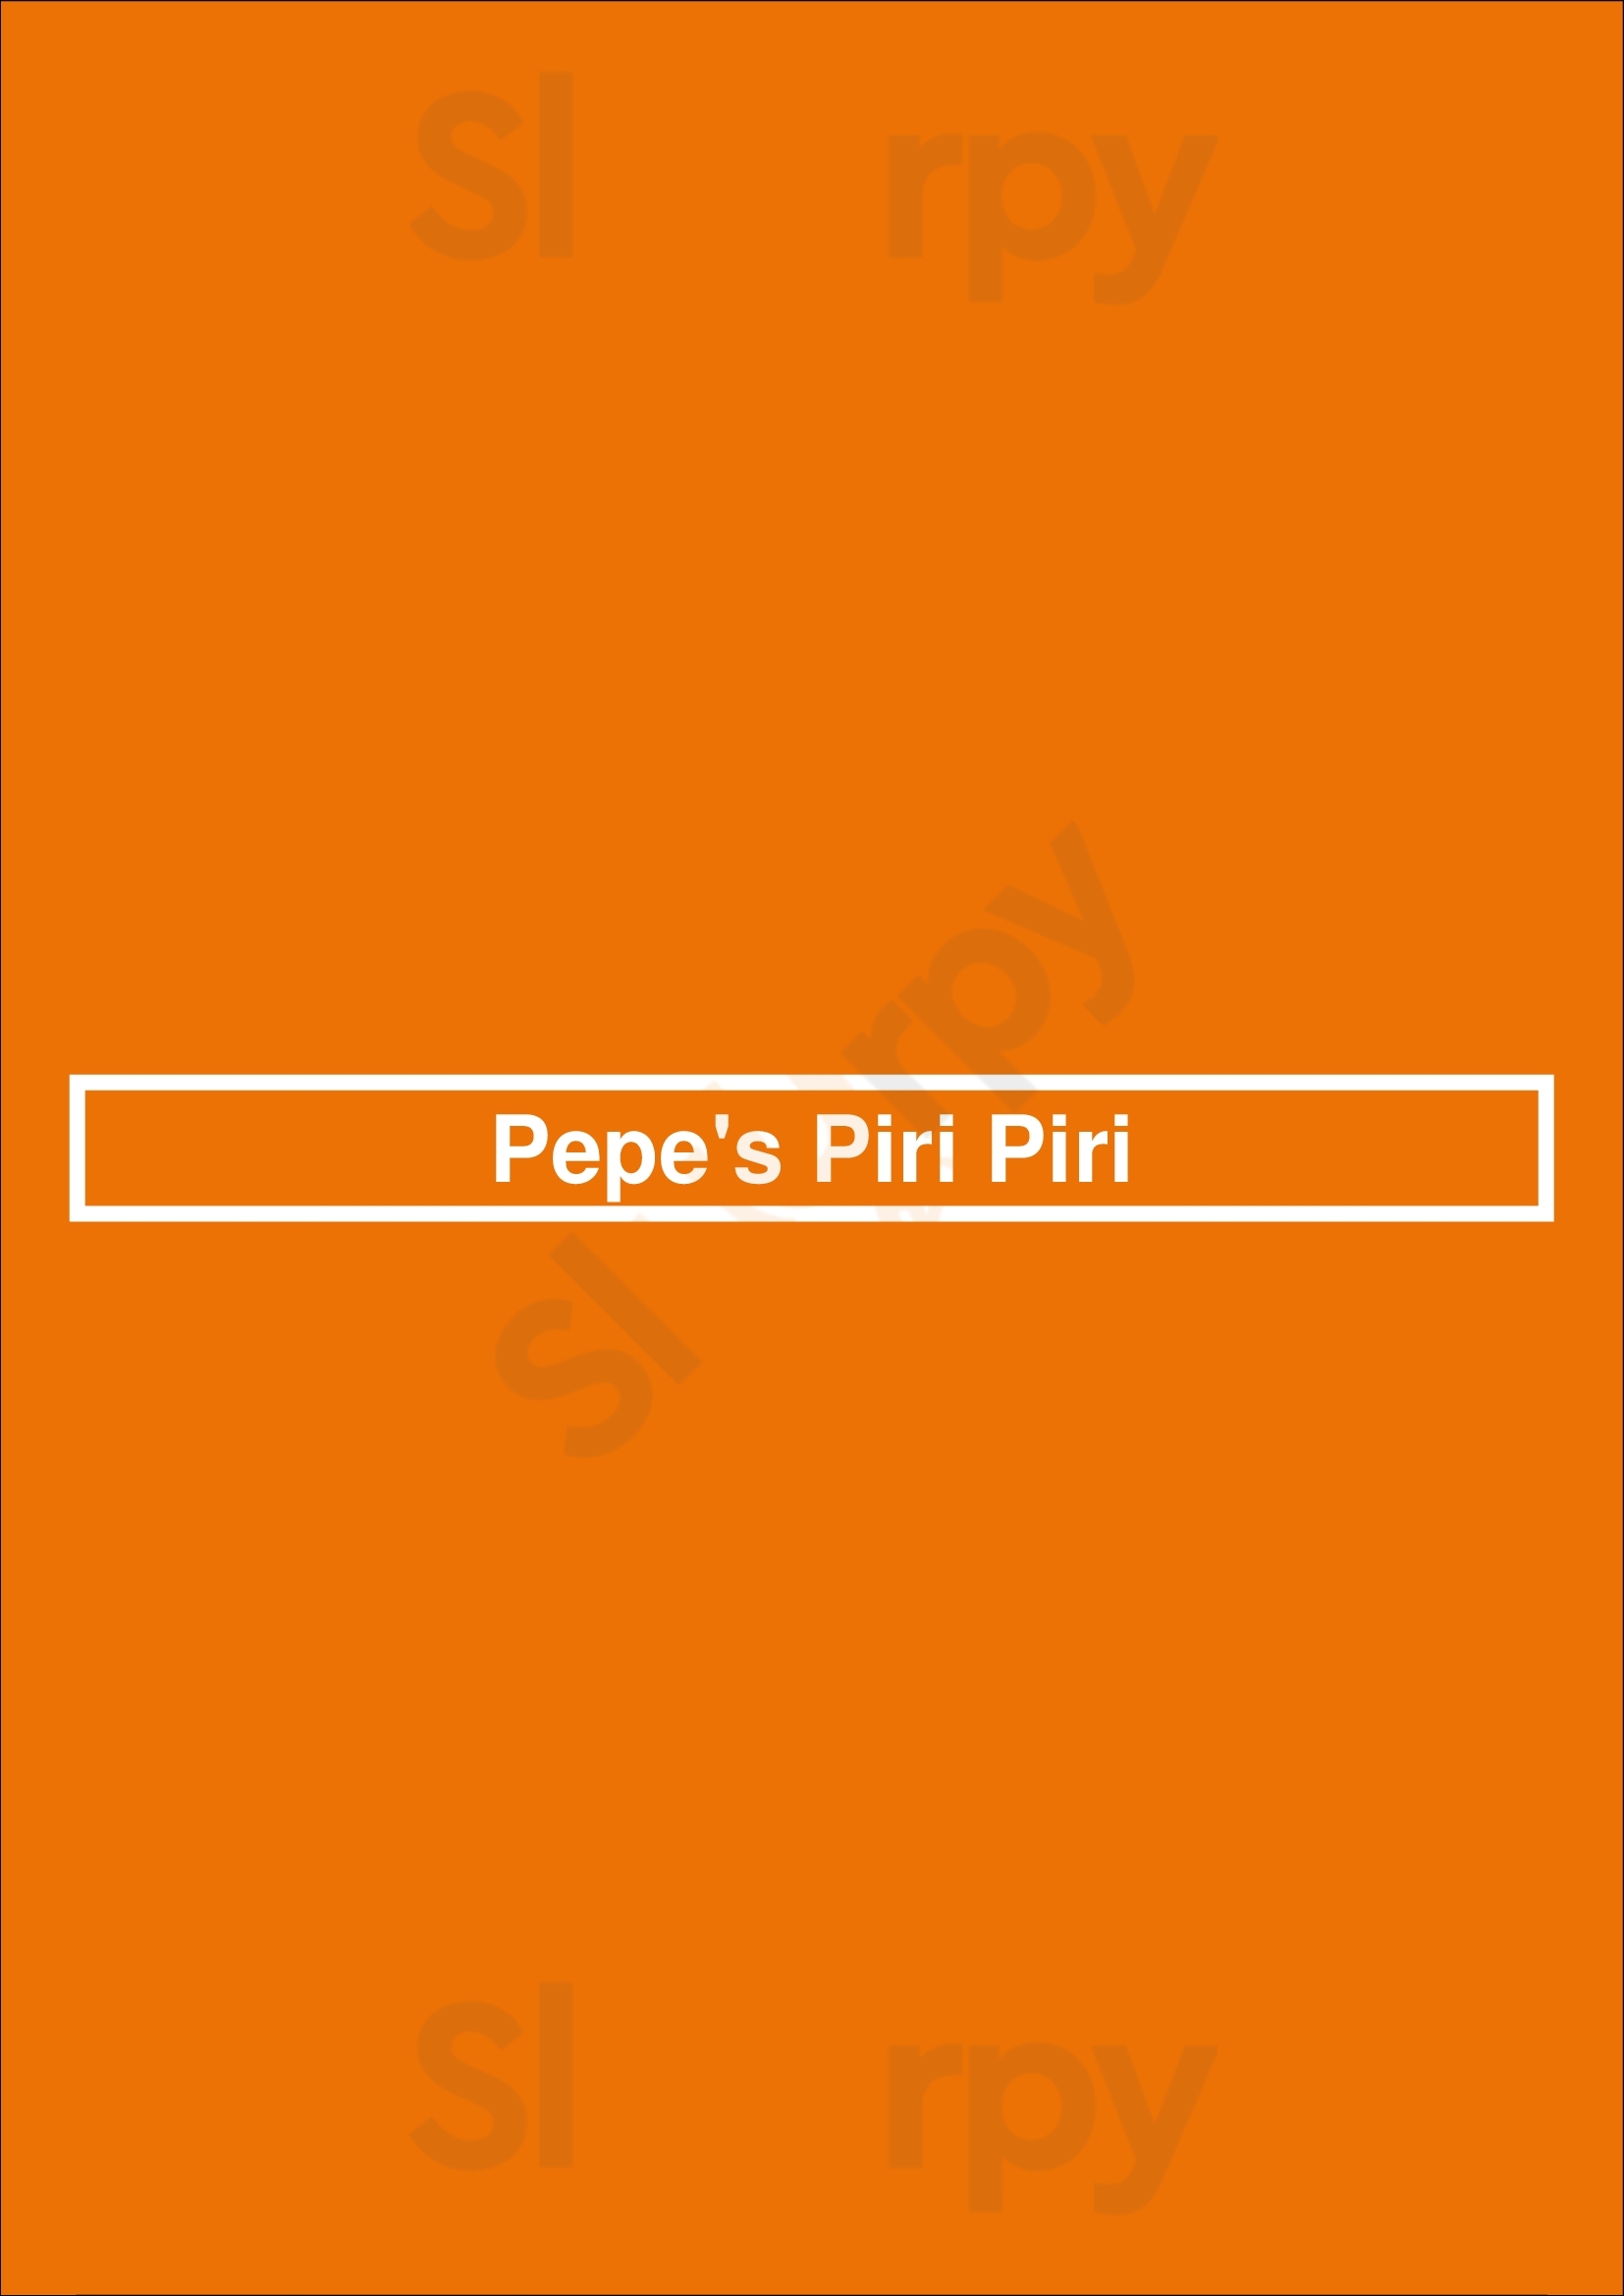 Pepe's Piri Piri - Sauchiehall Street Glasgow Menu - 1